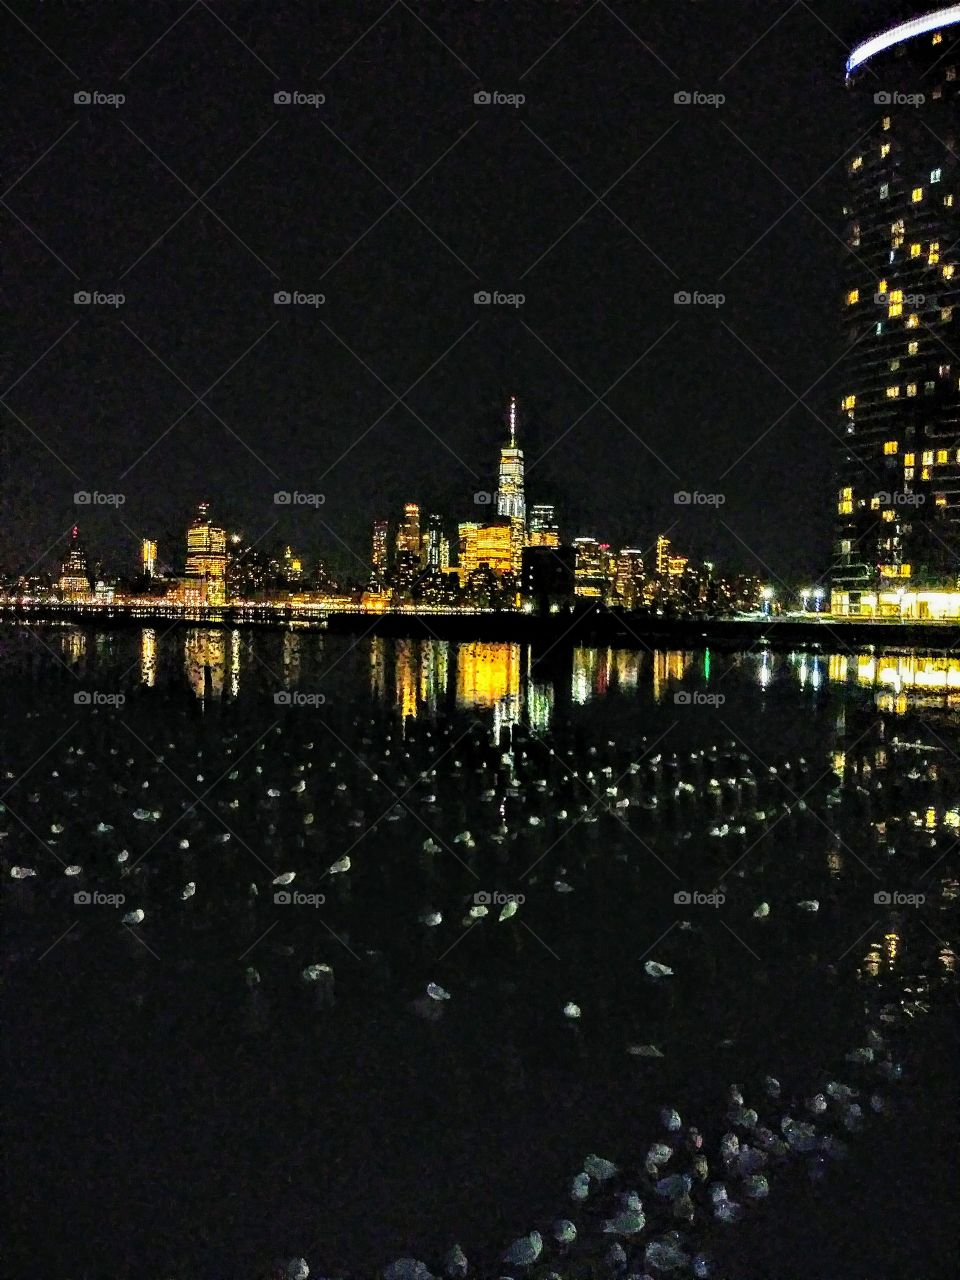 thousands of seagulls enjoying the view of Manhattan  along the Hudson River.